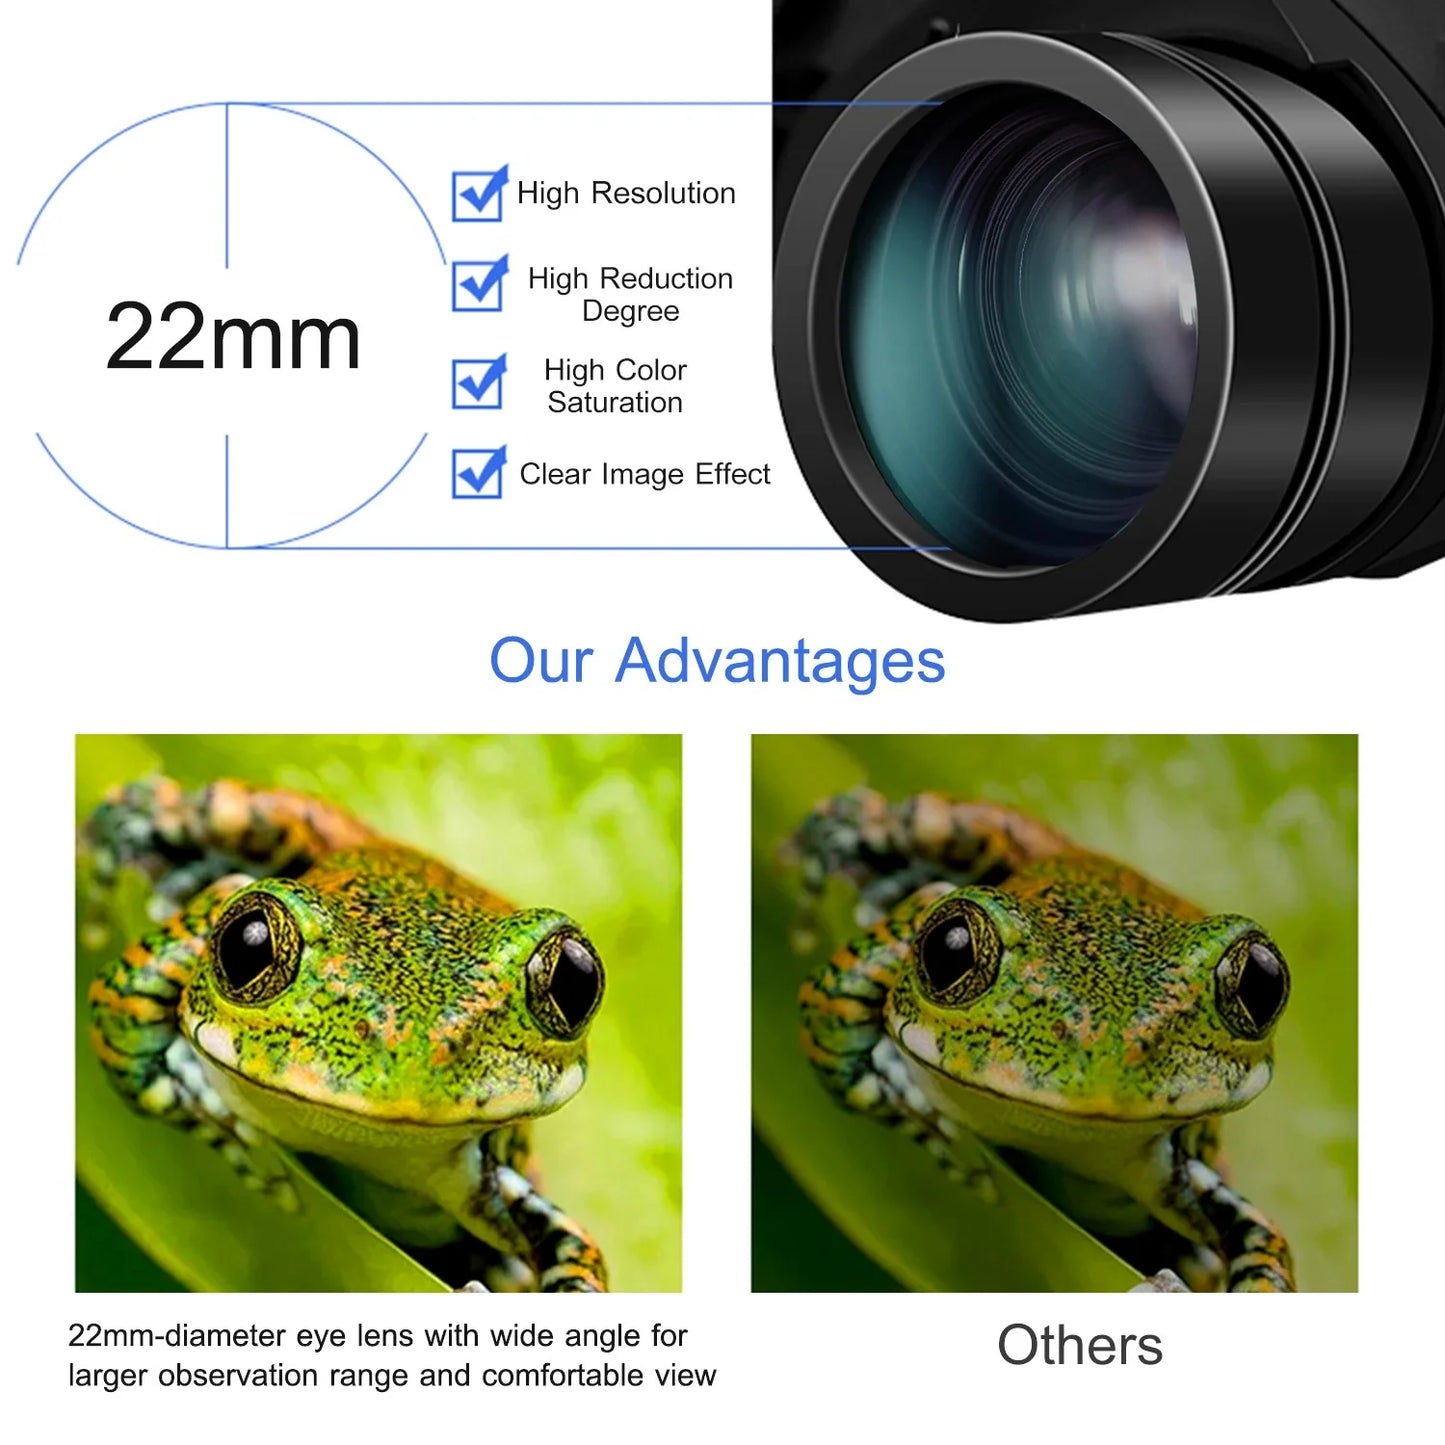 Product Title: Compact Binoculars with FMC Lens - Travel Hunting Gear High Power Zoom Binoculars - Night Vision Bird Watching Binocular